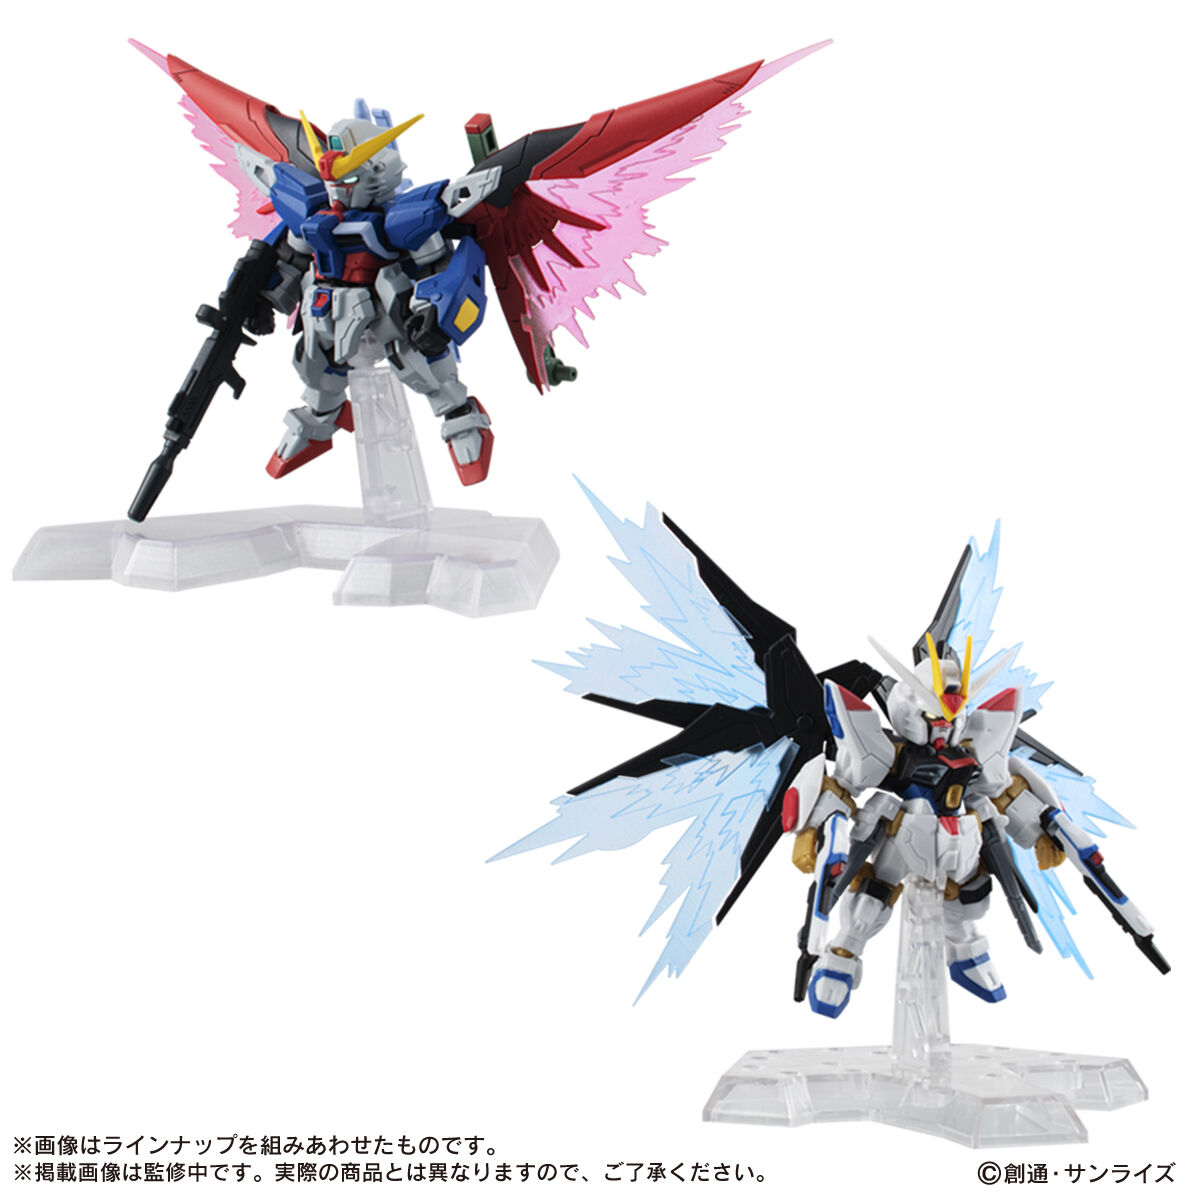 Gashapon Gundam Series: Gundam Mobile Suit Ensemble Expansion Parts Wing of Light for ZGMF-X42S Destiny Gundam + ZGMF-X20A Strike Freedom Gundam